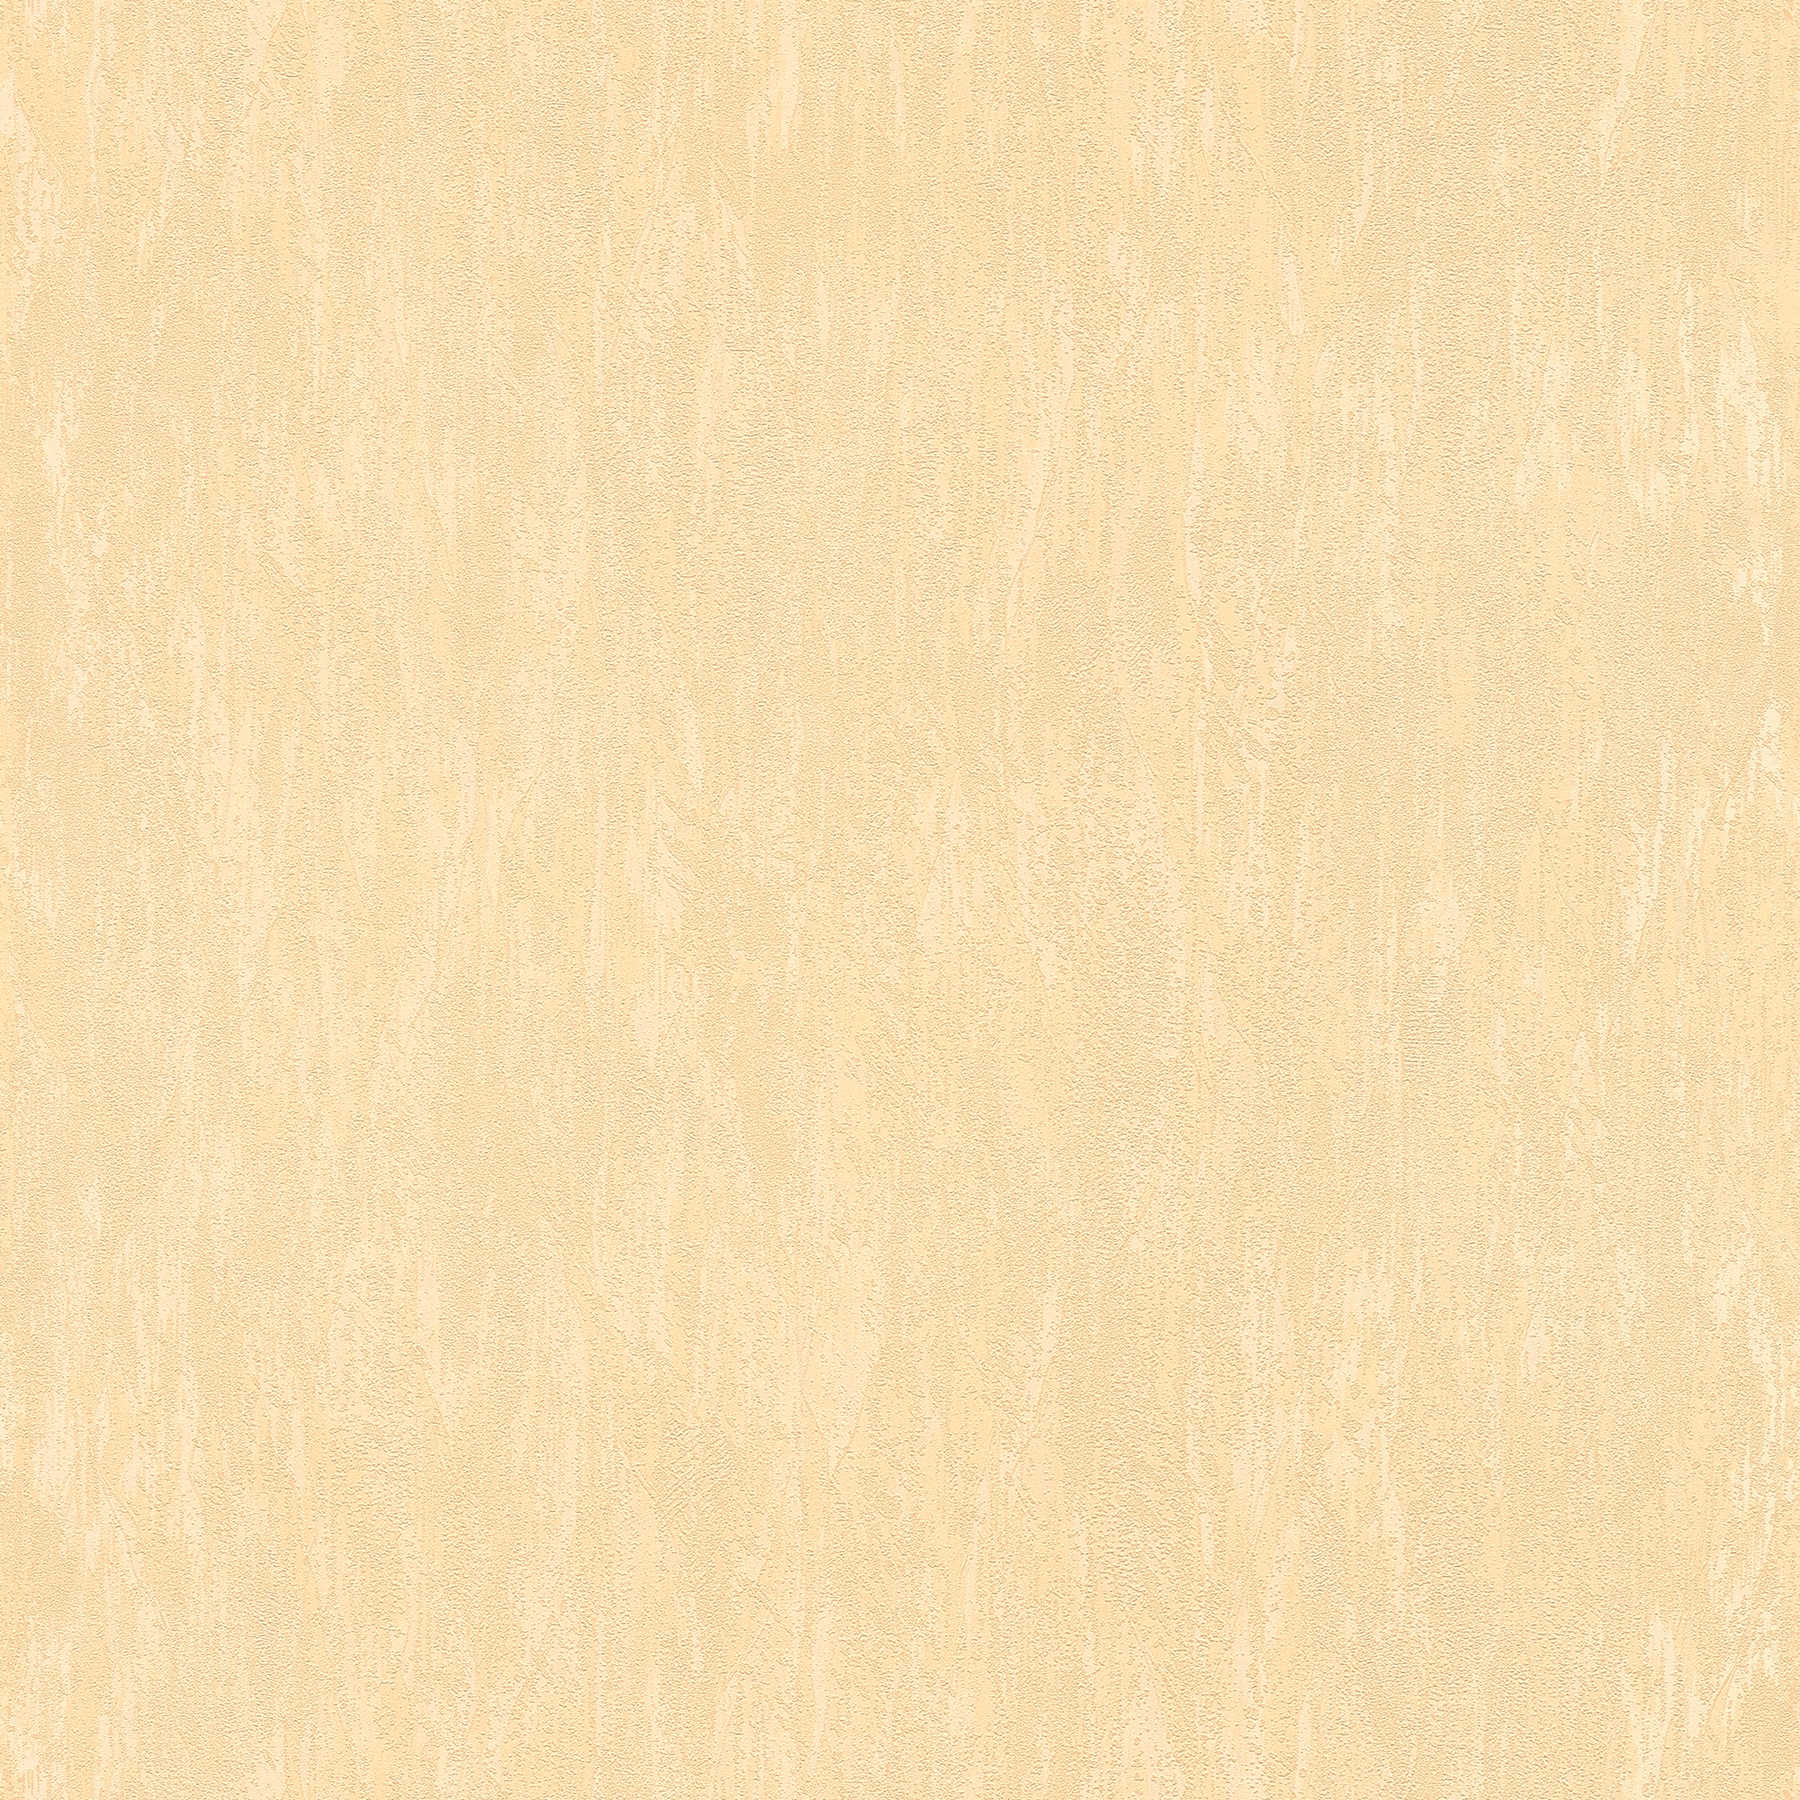 Putzoptik Papiertapete helles Gelb mit Struktureffekt
